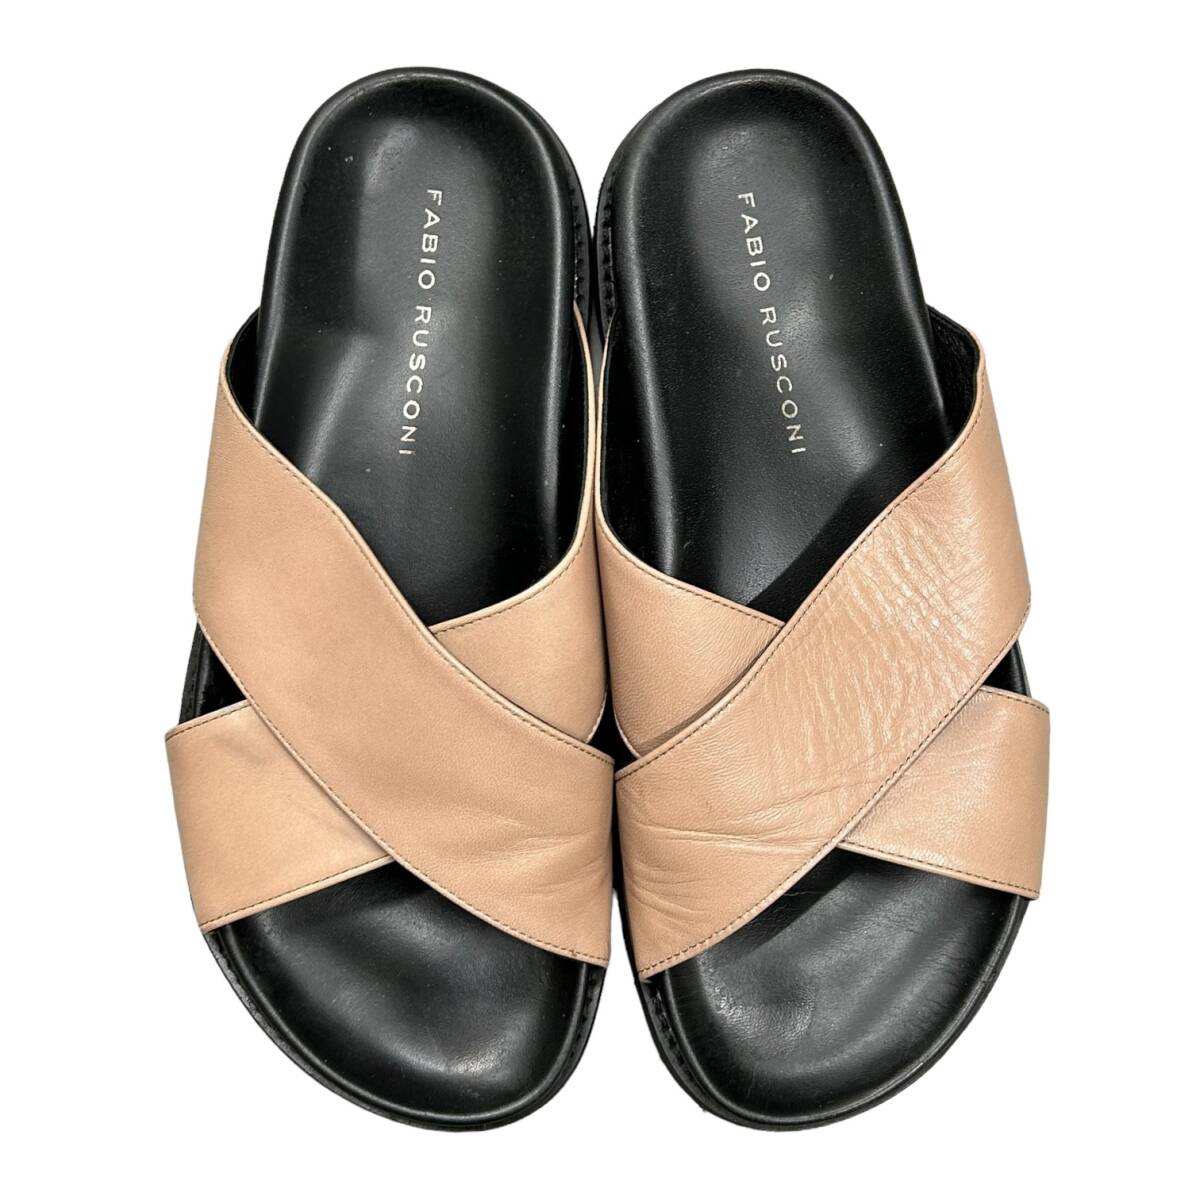 FABIO RUSCONI fabio rusko-ni sandals pink beige Flat sole leather lady's size inscription 37[ used ]